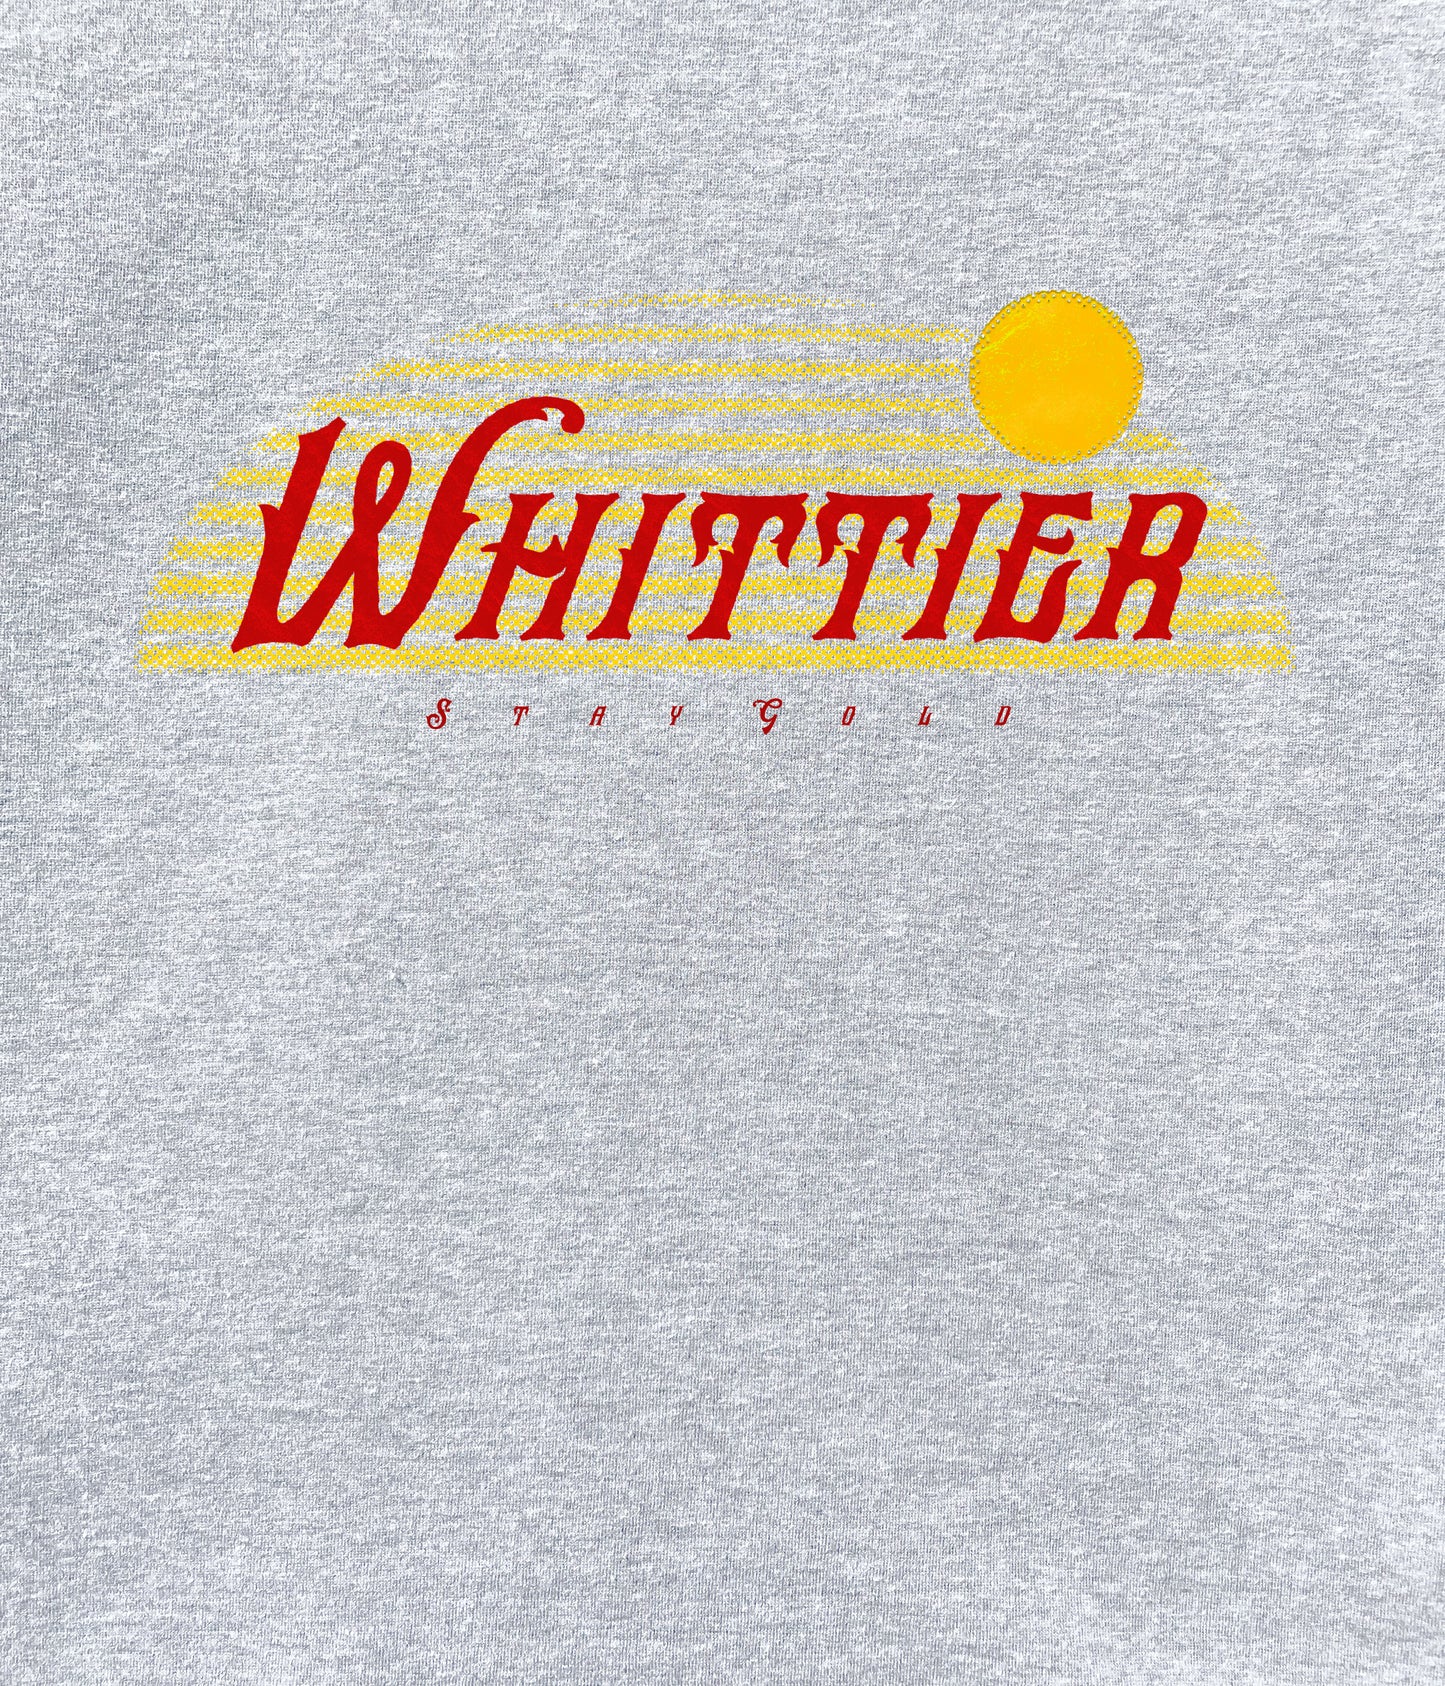 Whittier Stay Gold